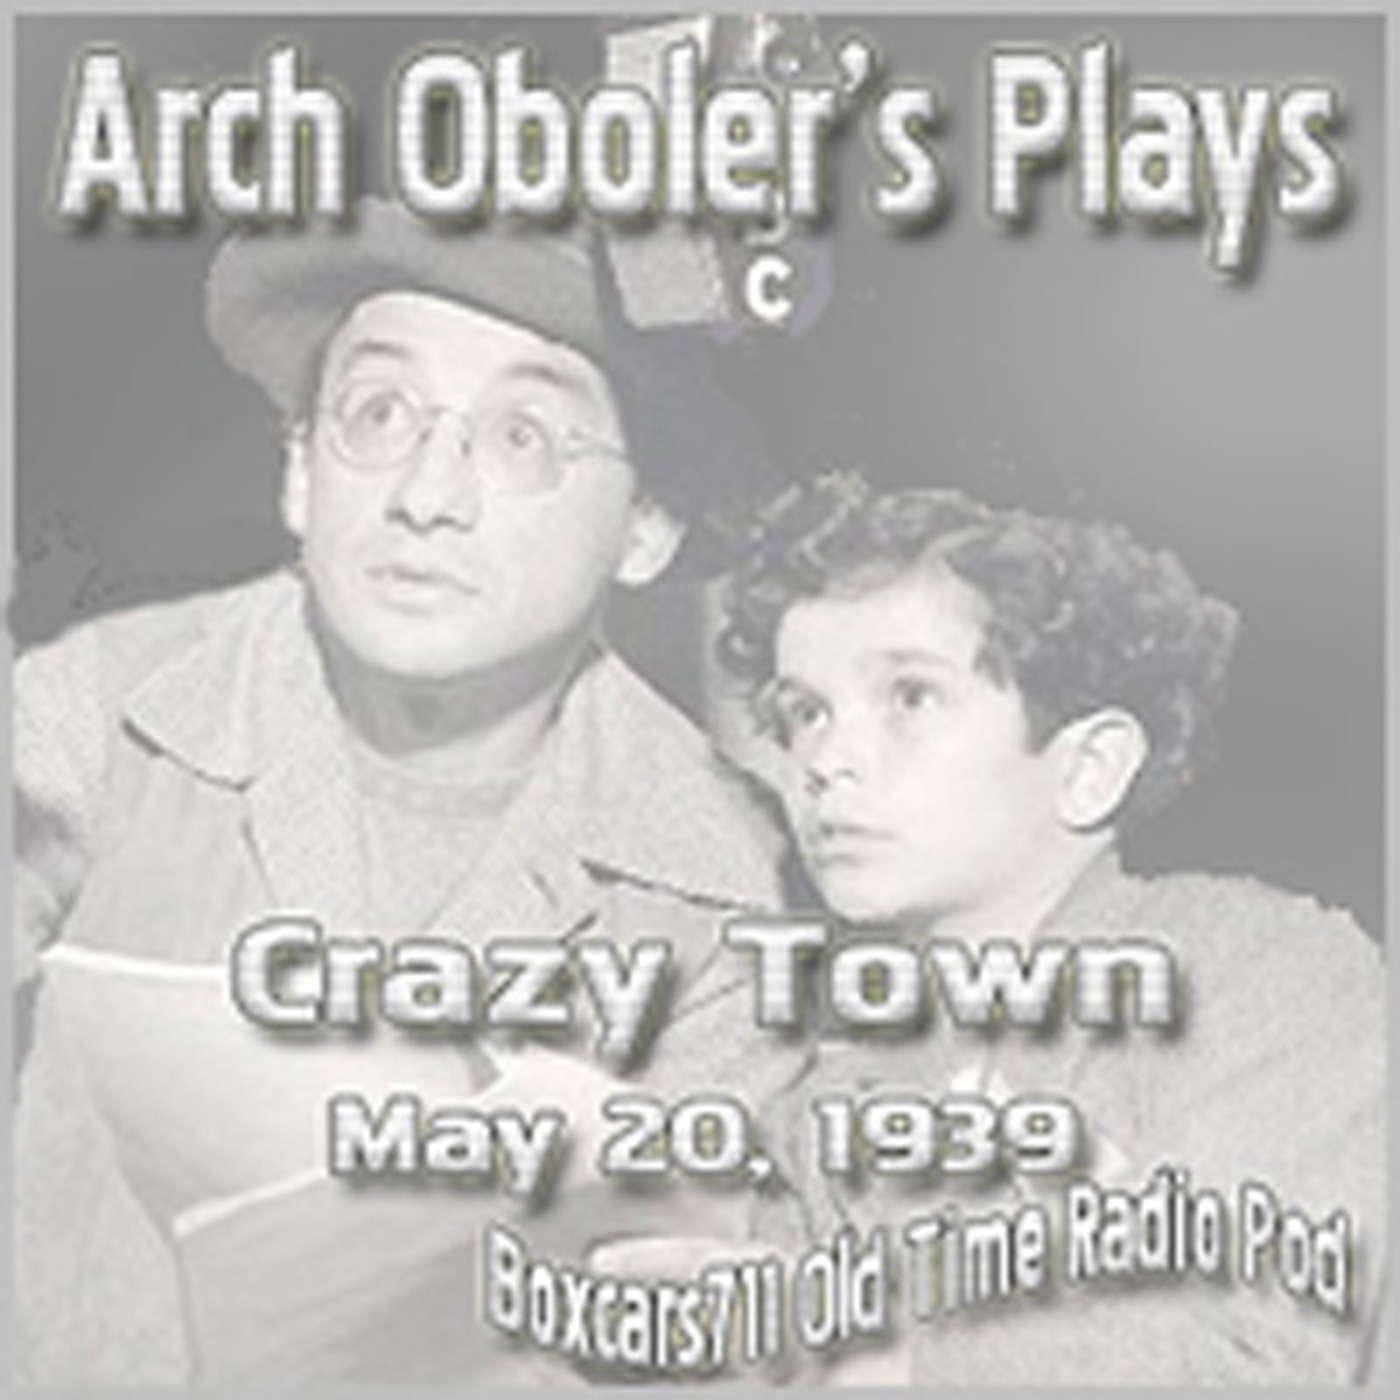 Episode 9571: Arch Oboler's Plays - 